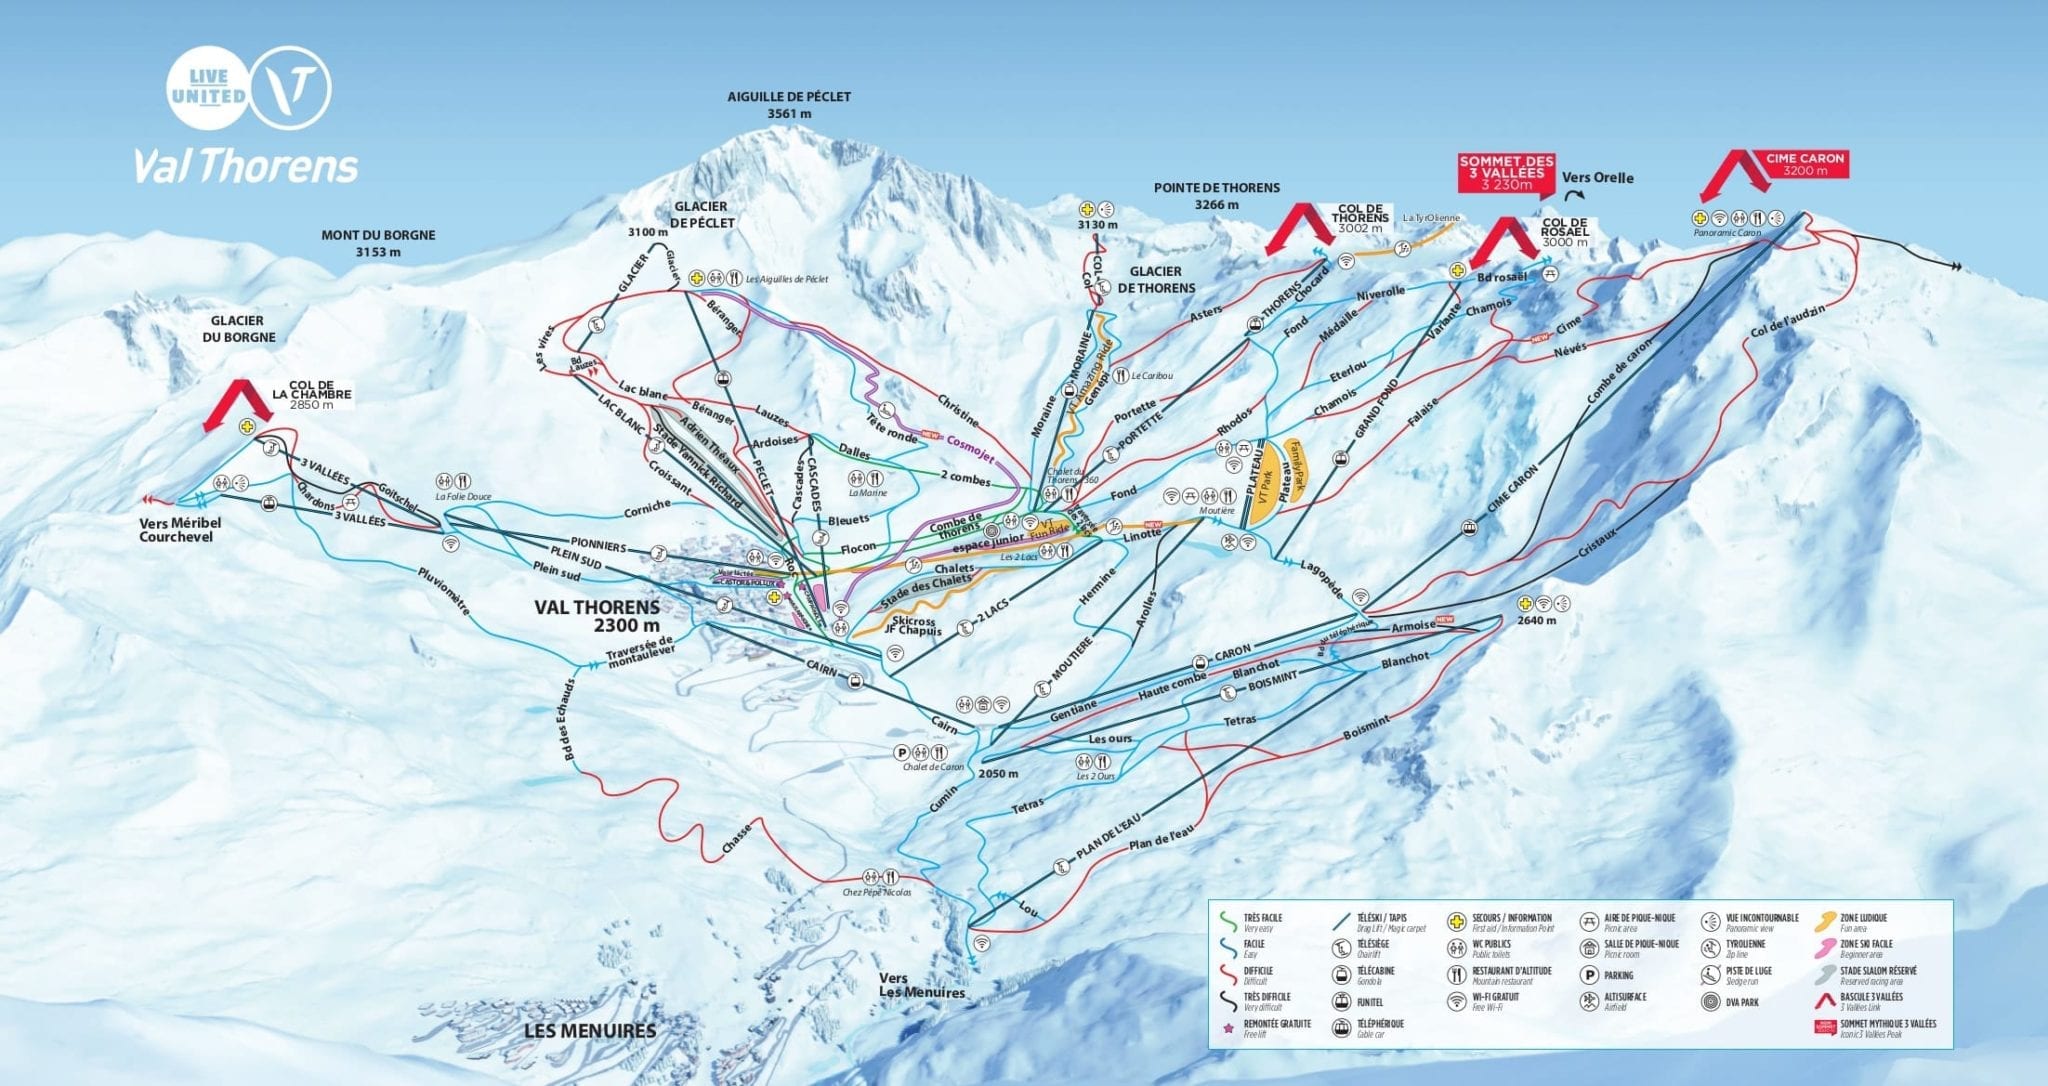 Val Thorens ski resort 2,300m - Europe's highest ski resort